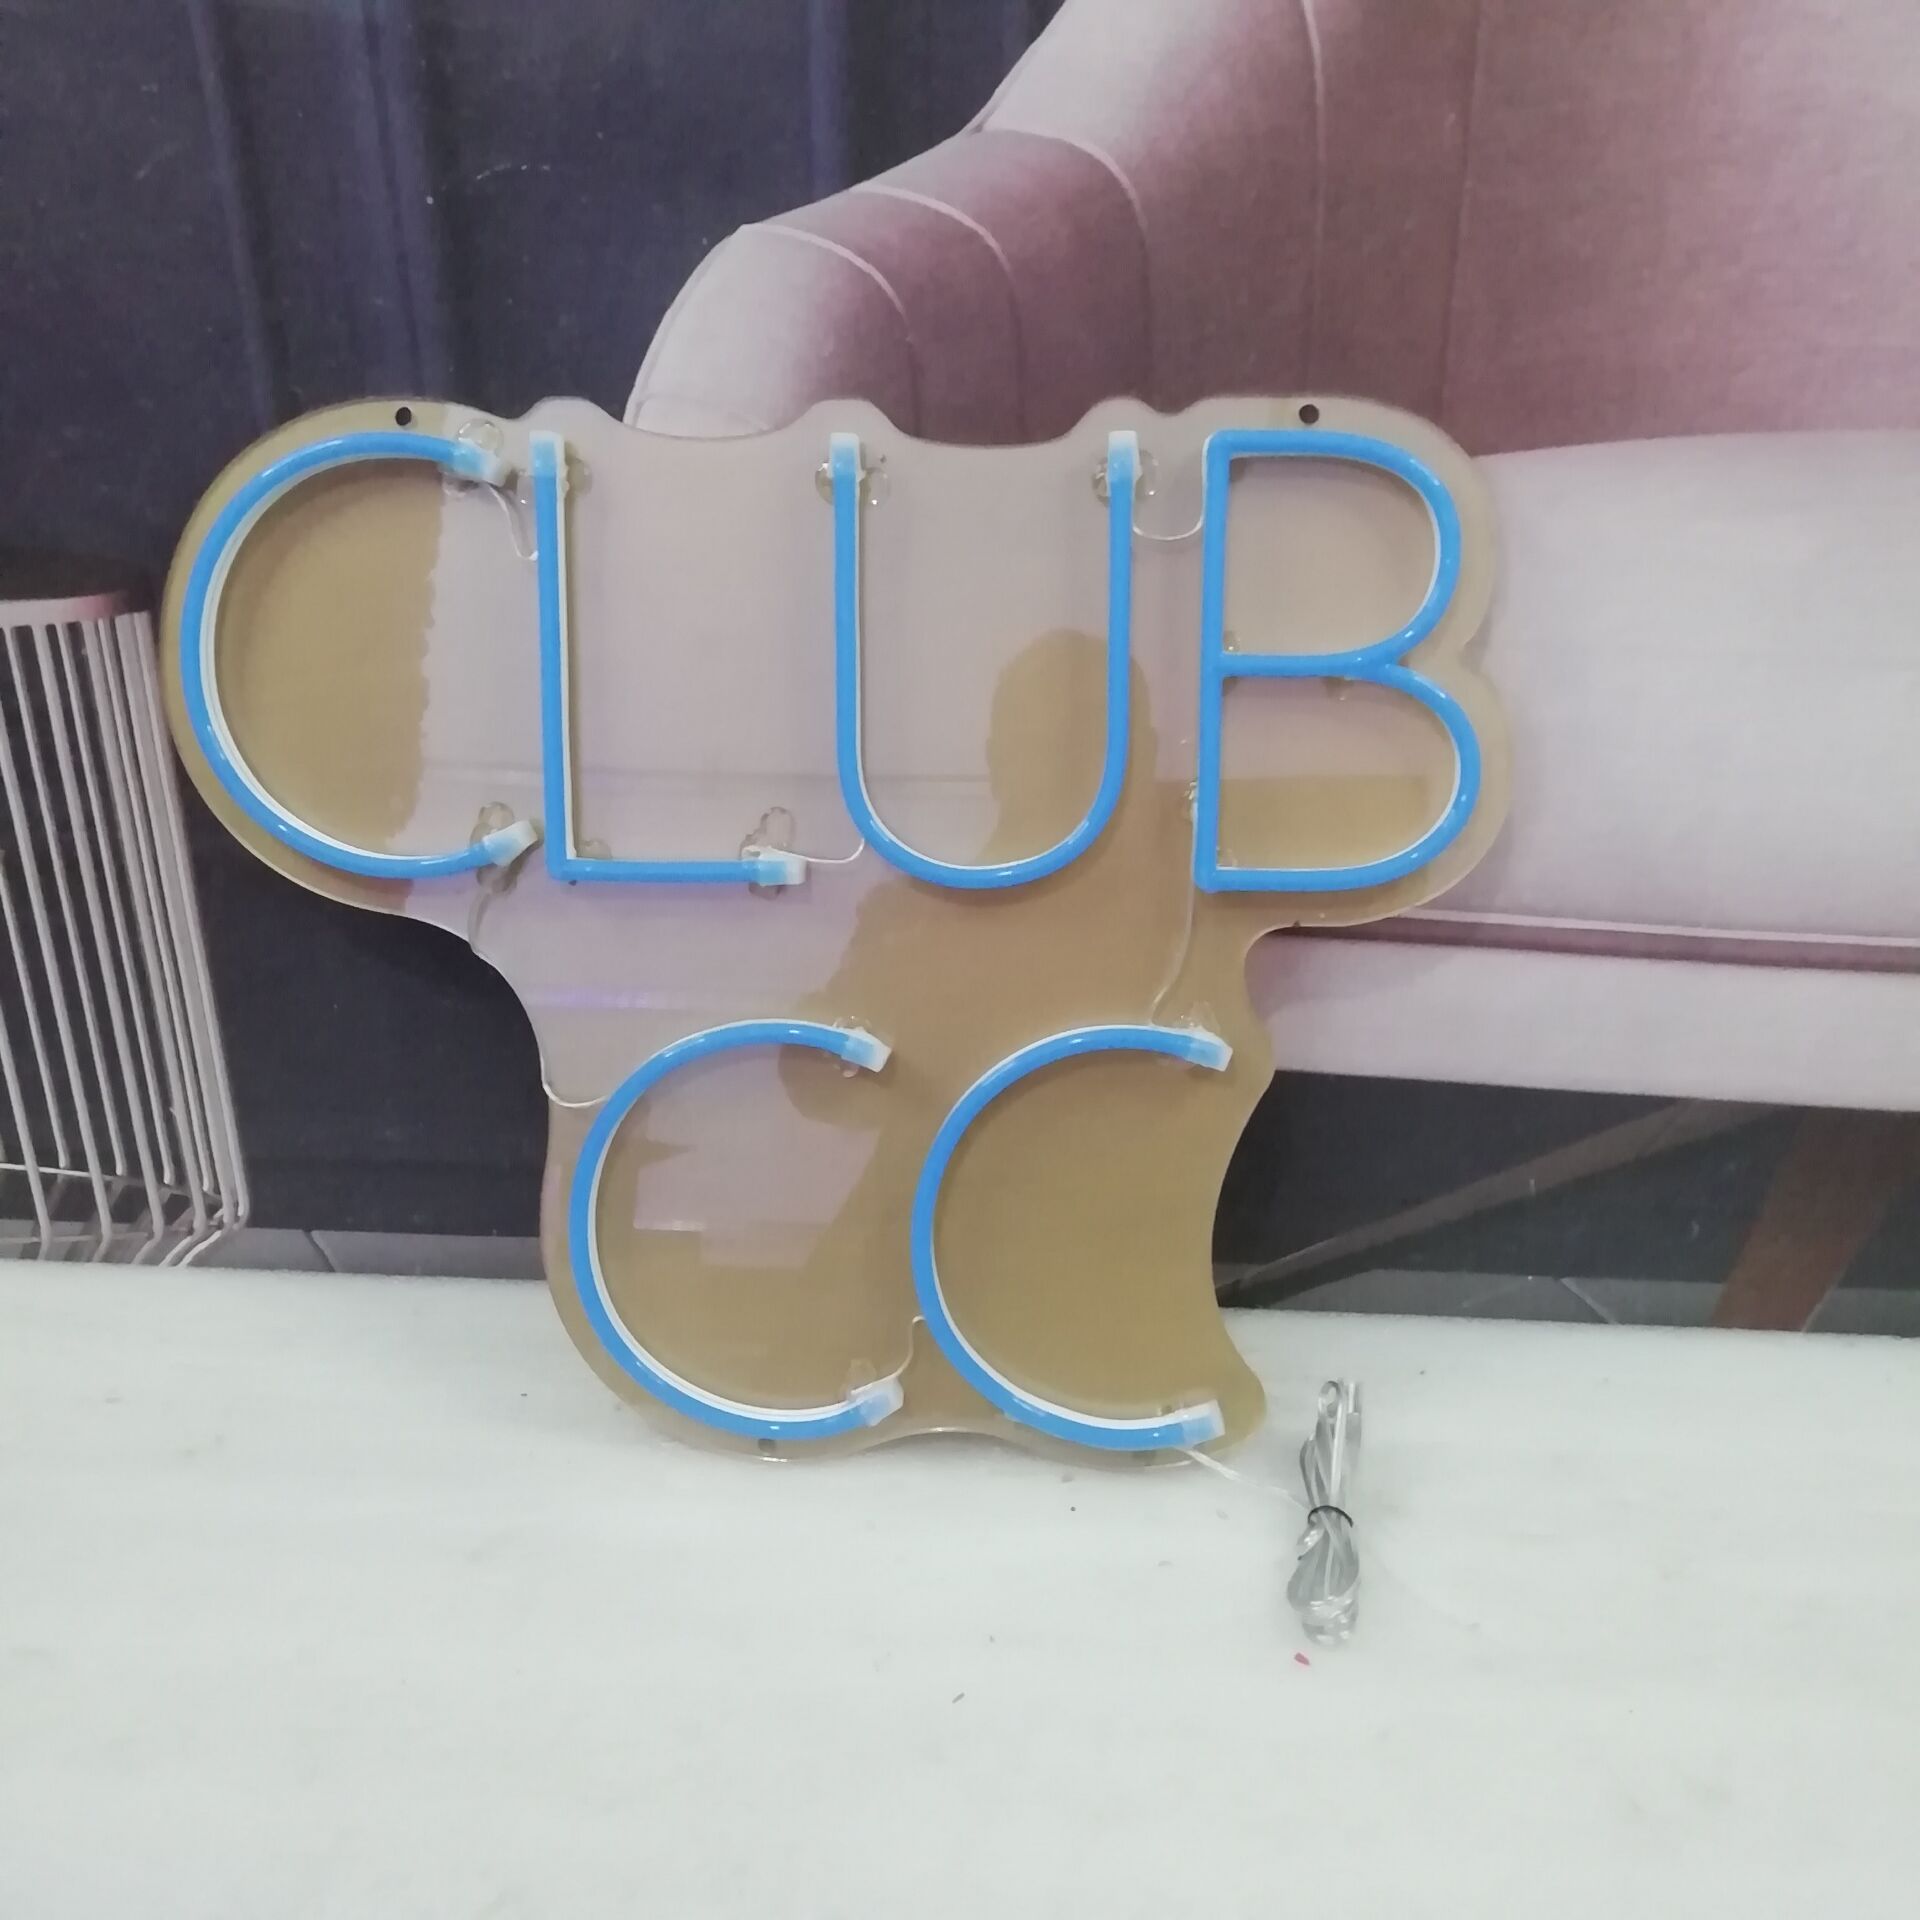 CLUB CC Neon Signs